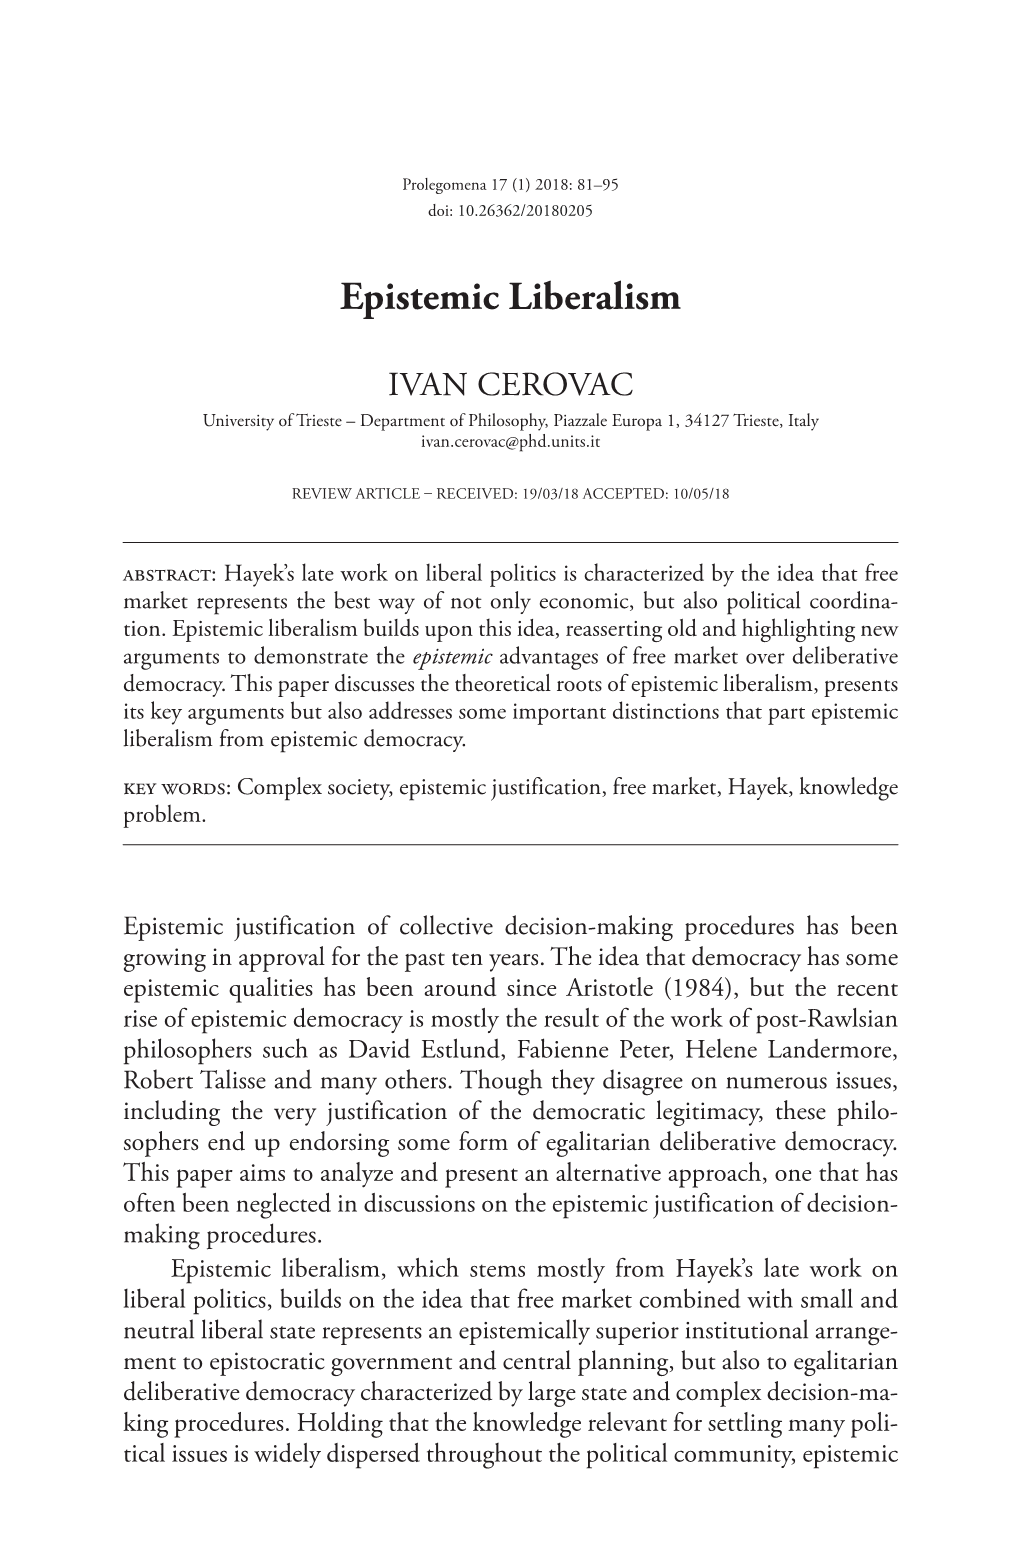 Epistemic Liberalism